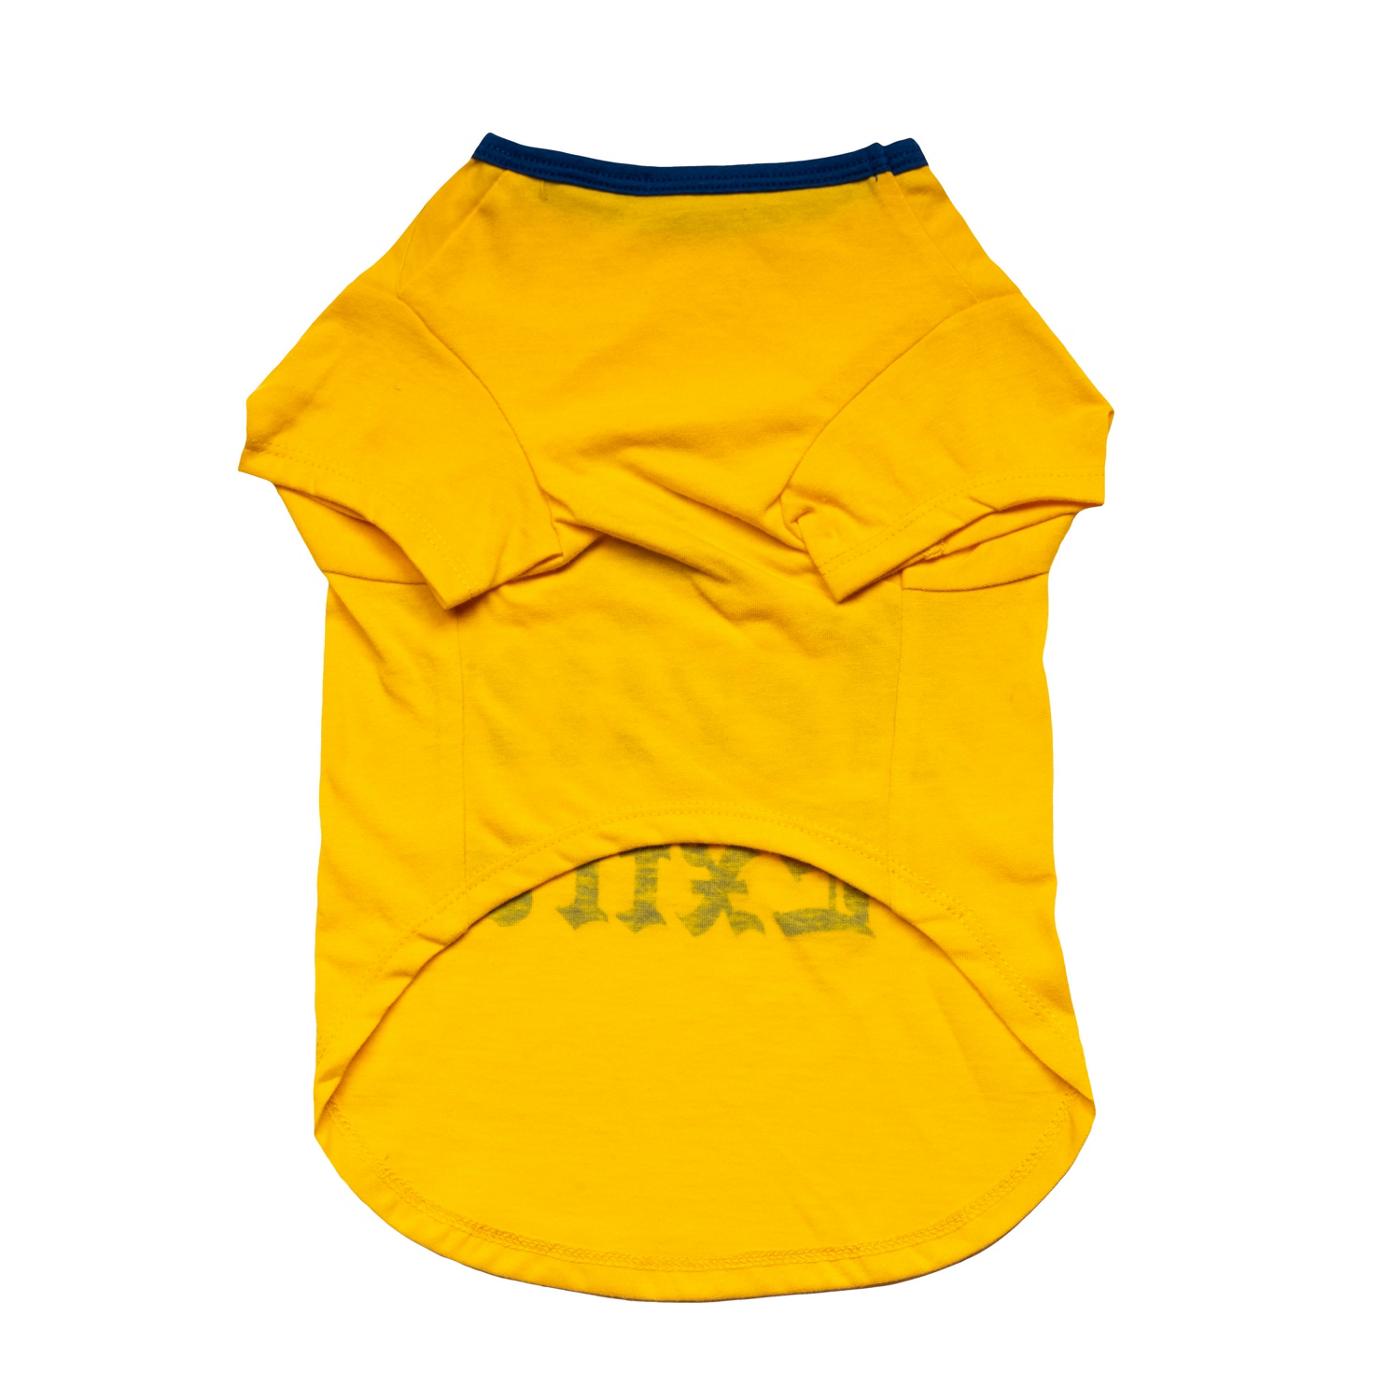 Simply Dog Yellow Feelin Extra Shirt Medium; image 2 of 2